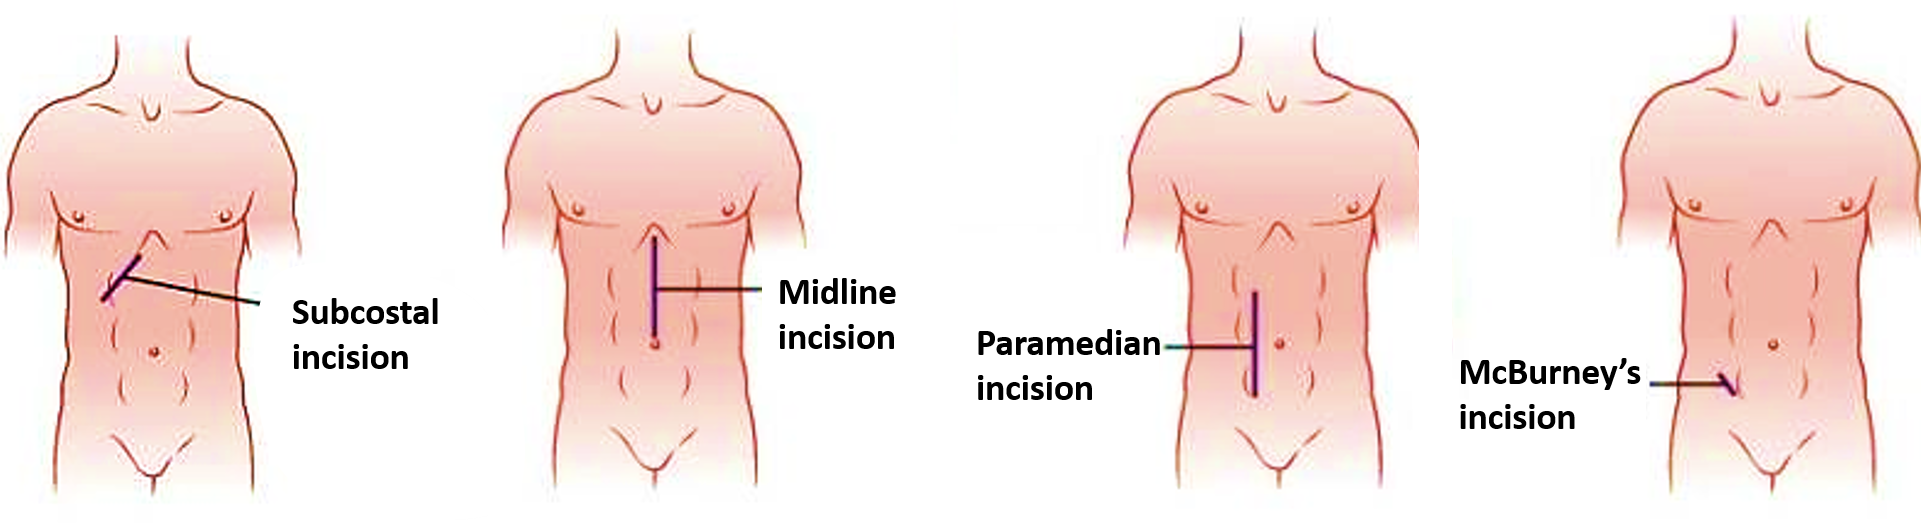 main abdominal incisions